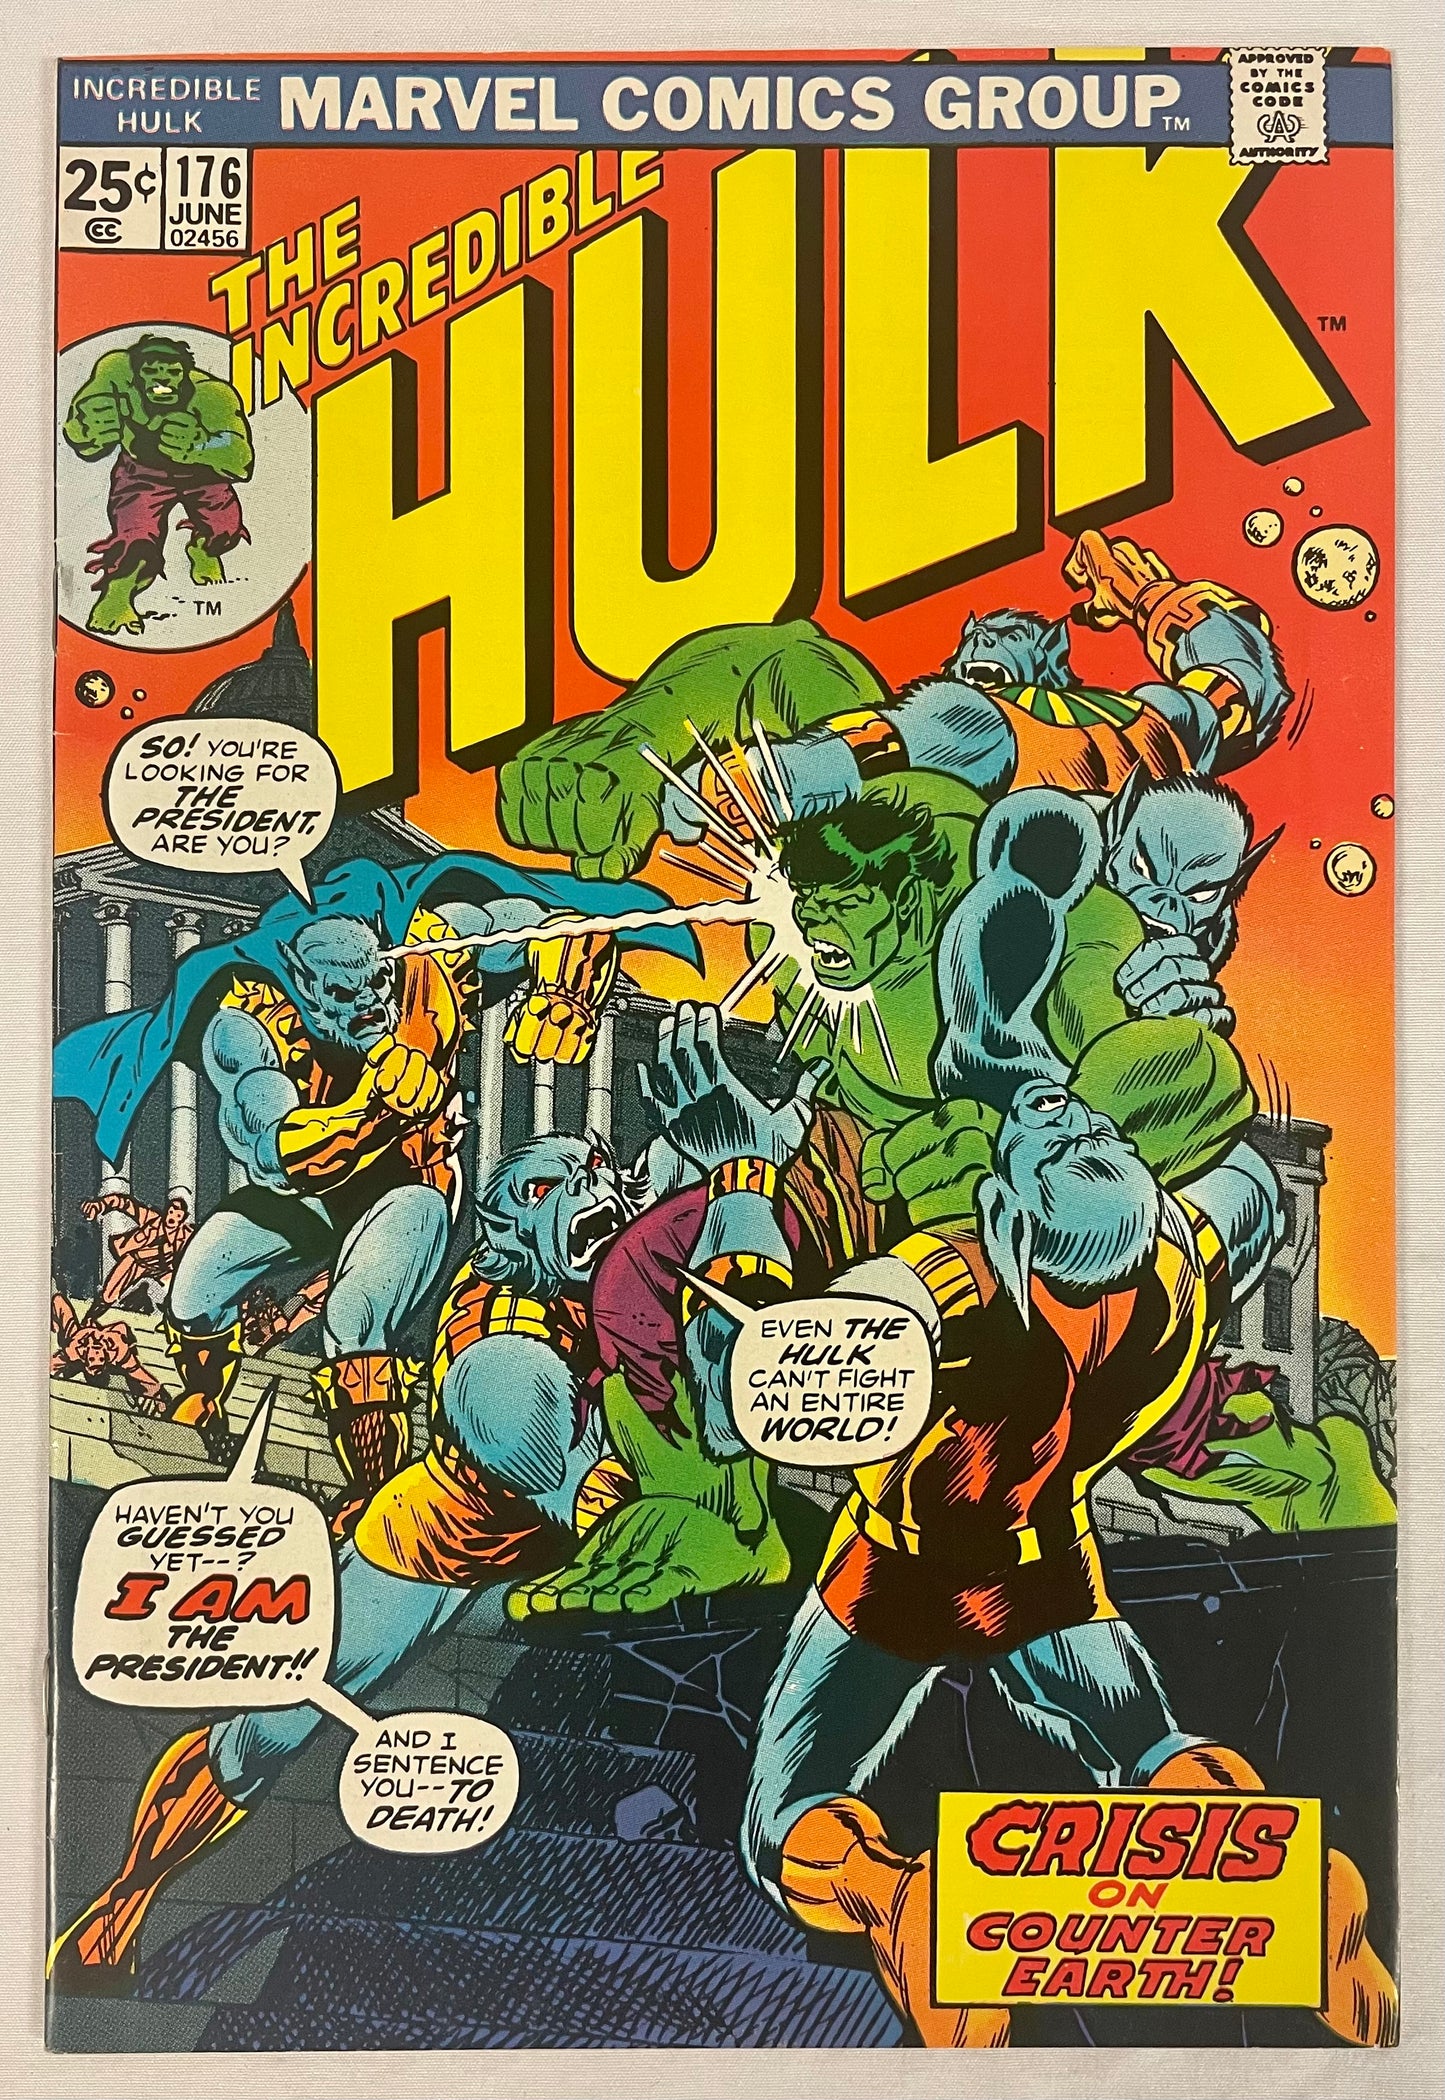 Marvel Comics The Incredible Hulk #176